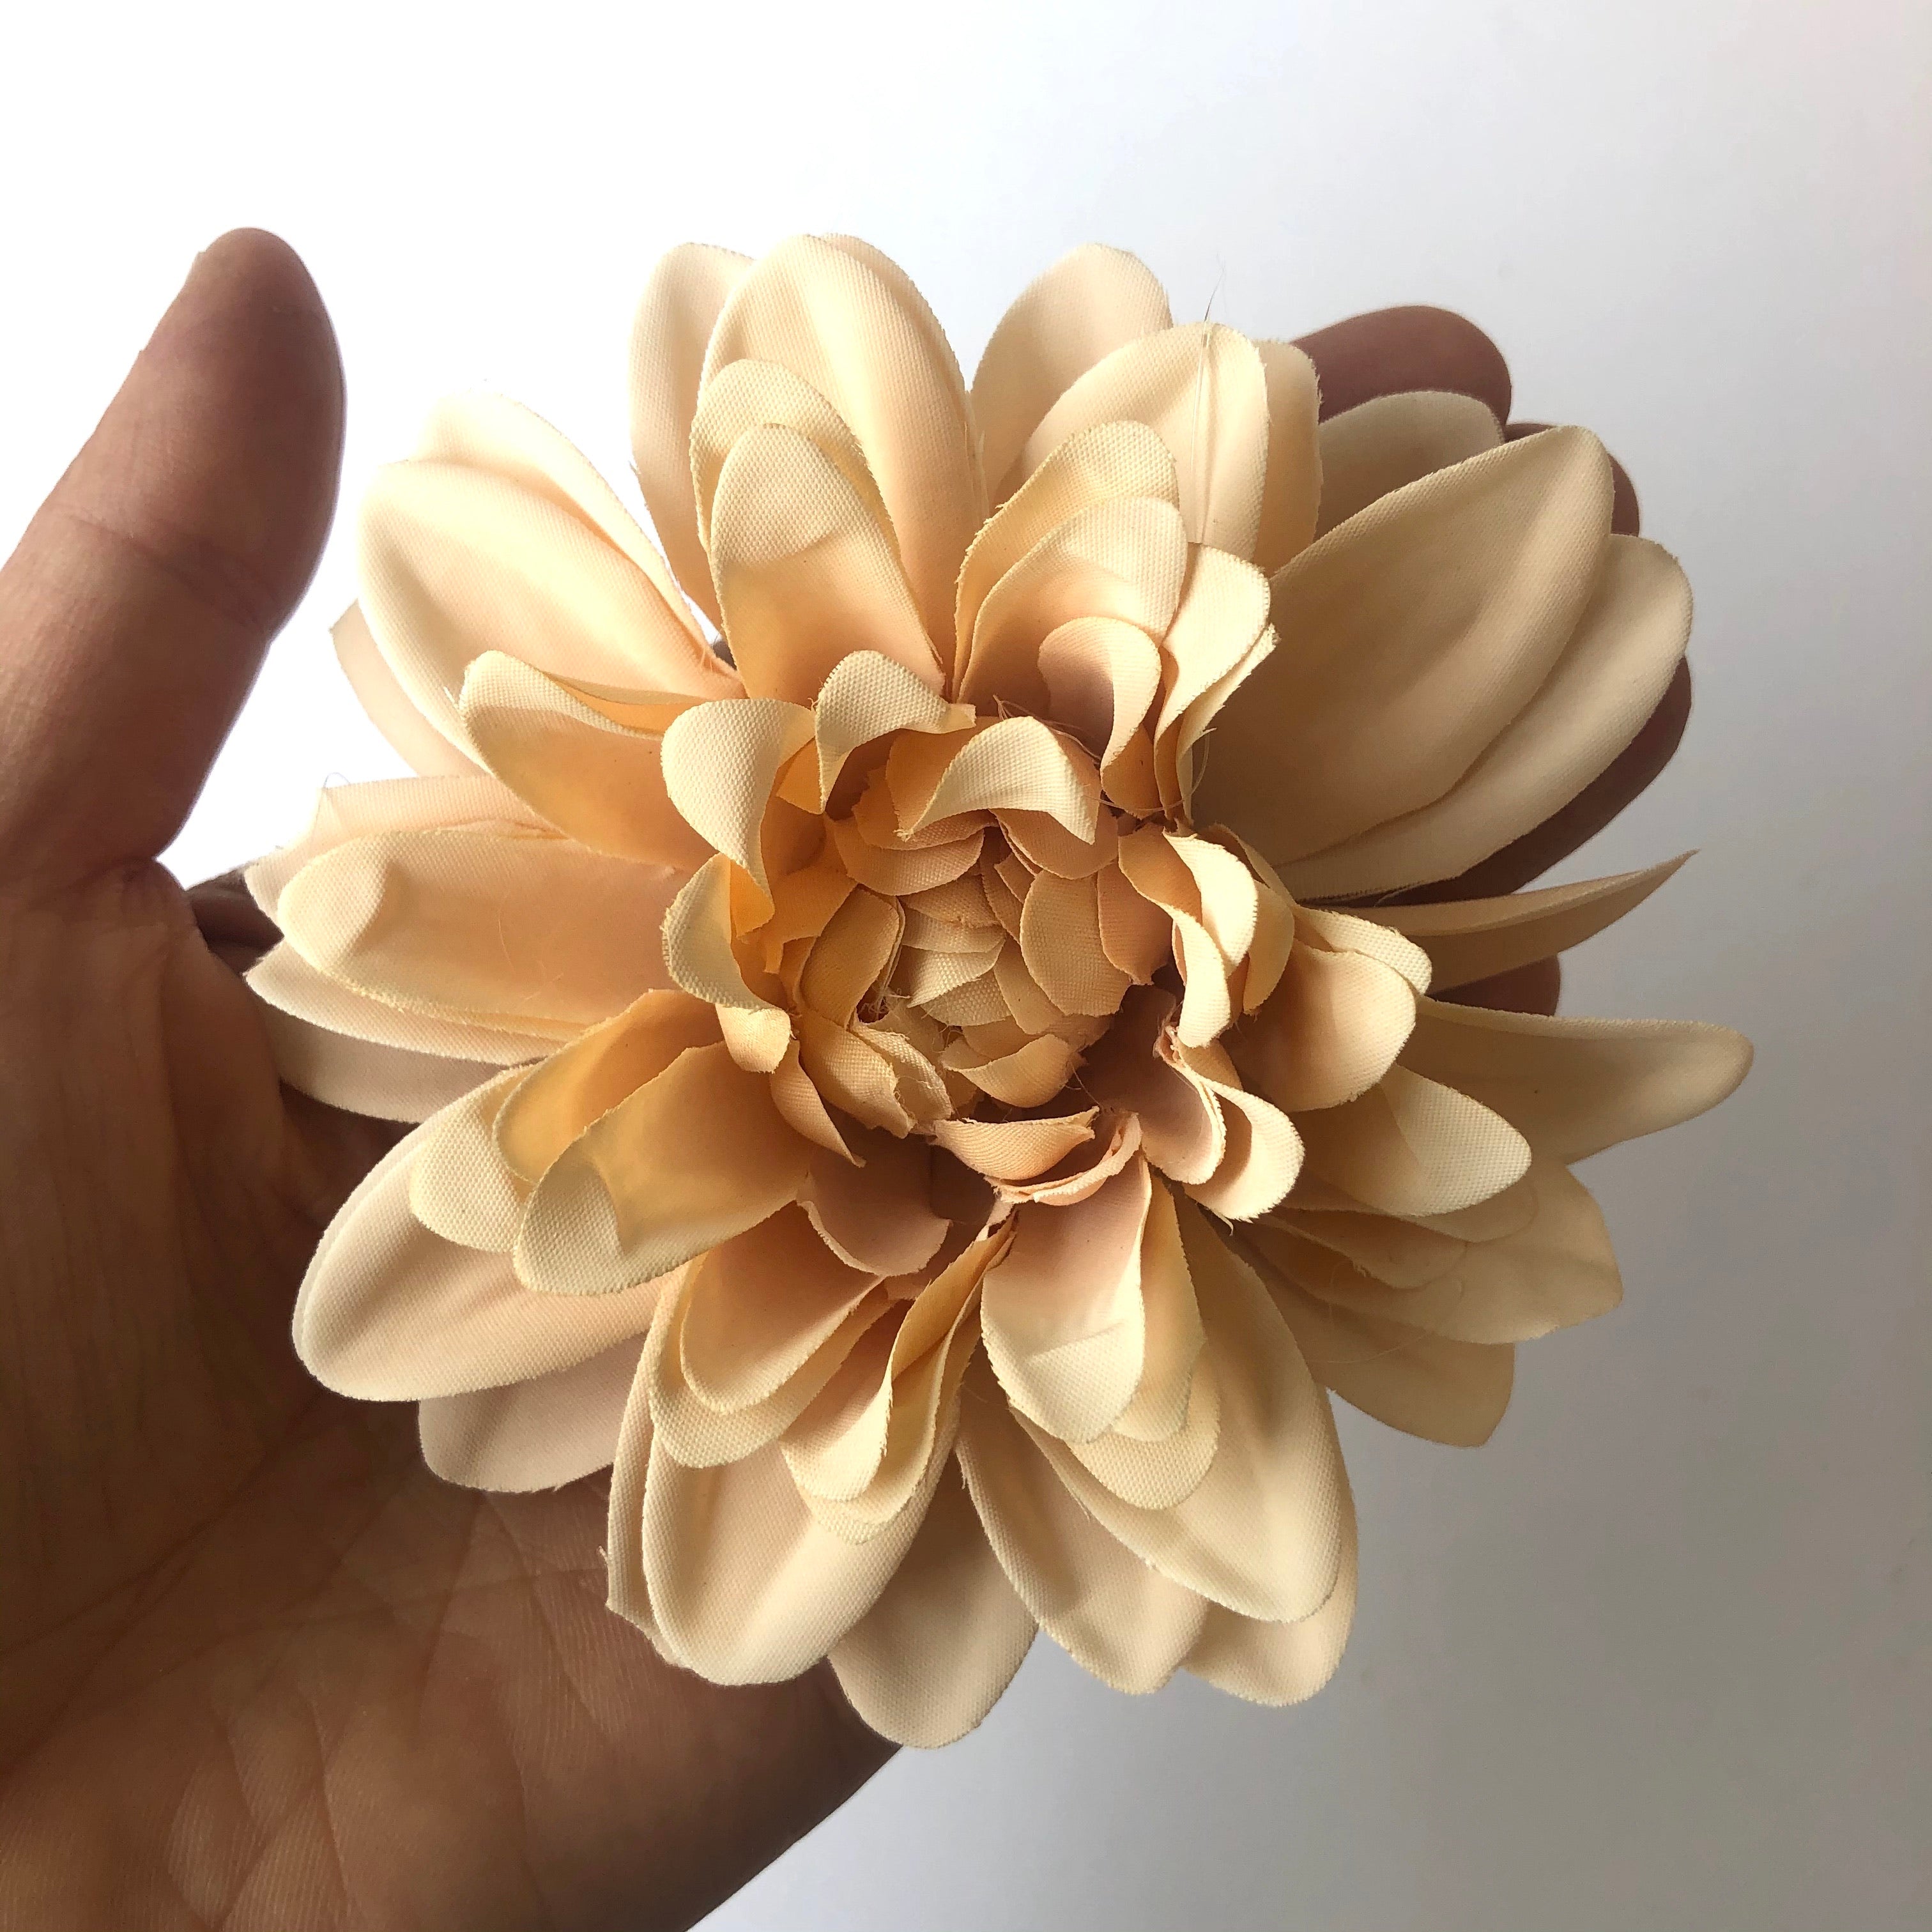 Artificial Silk Flower Heads - Vintage Peach Chrysanthemum Style 13 - 1pc